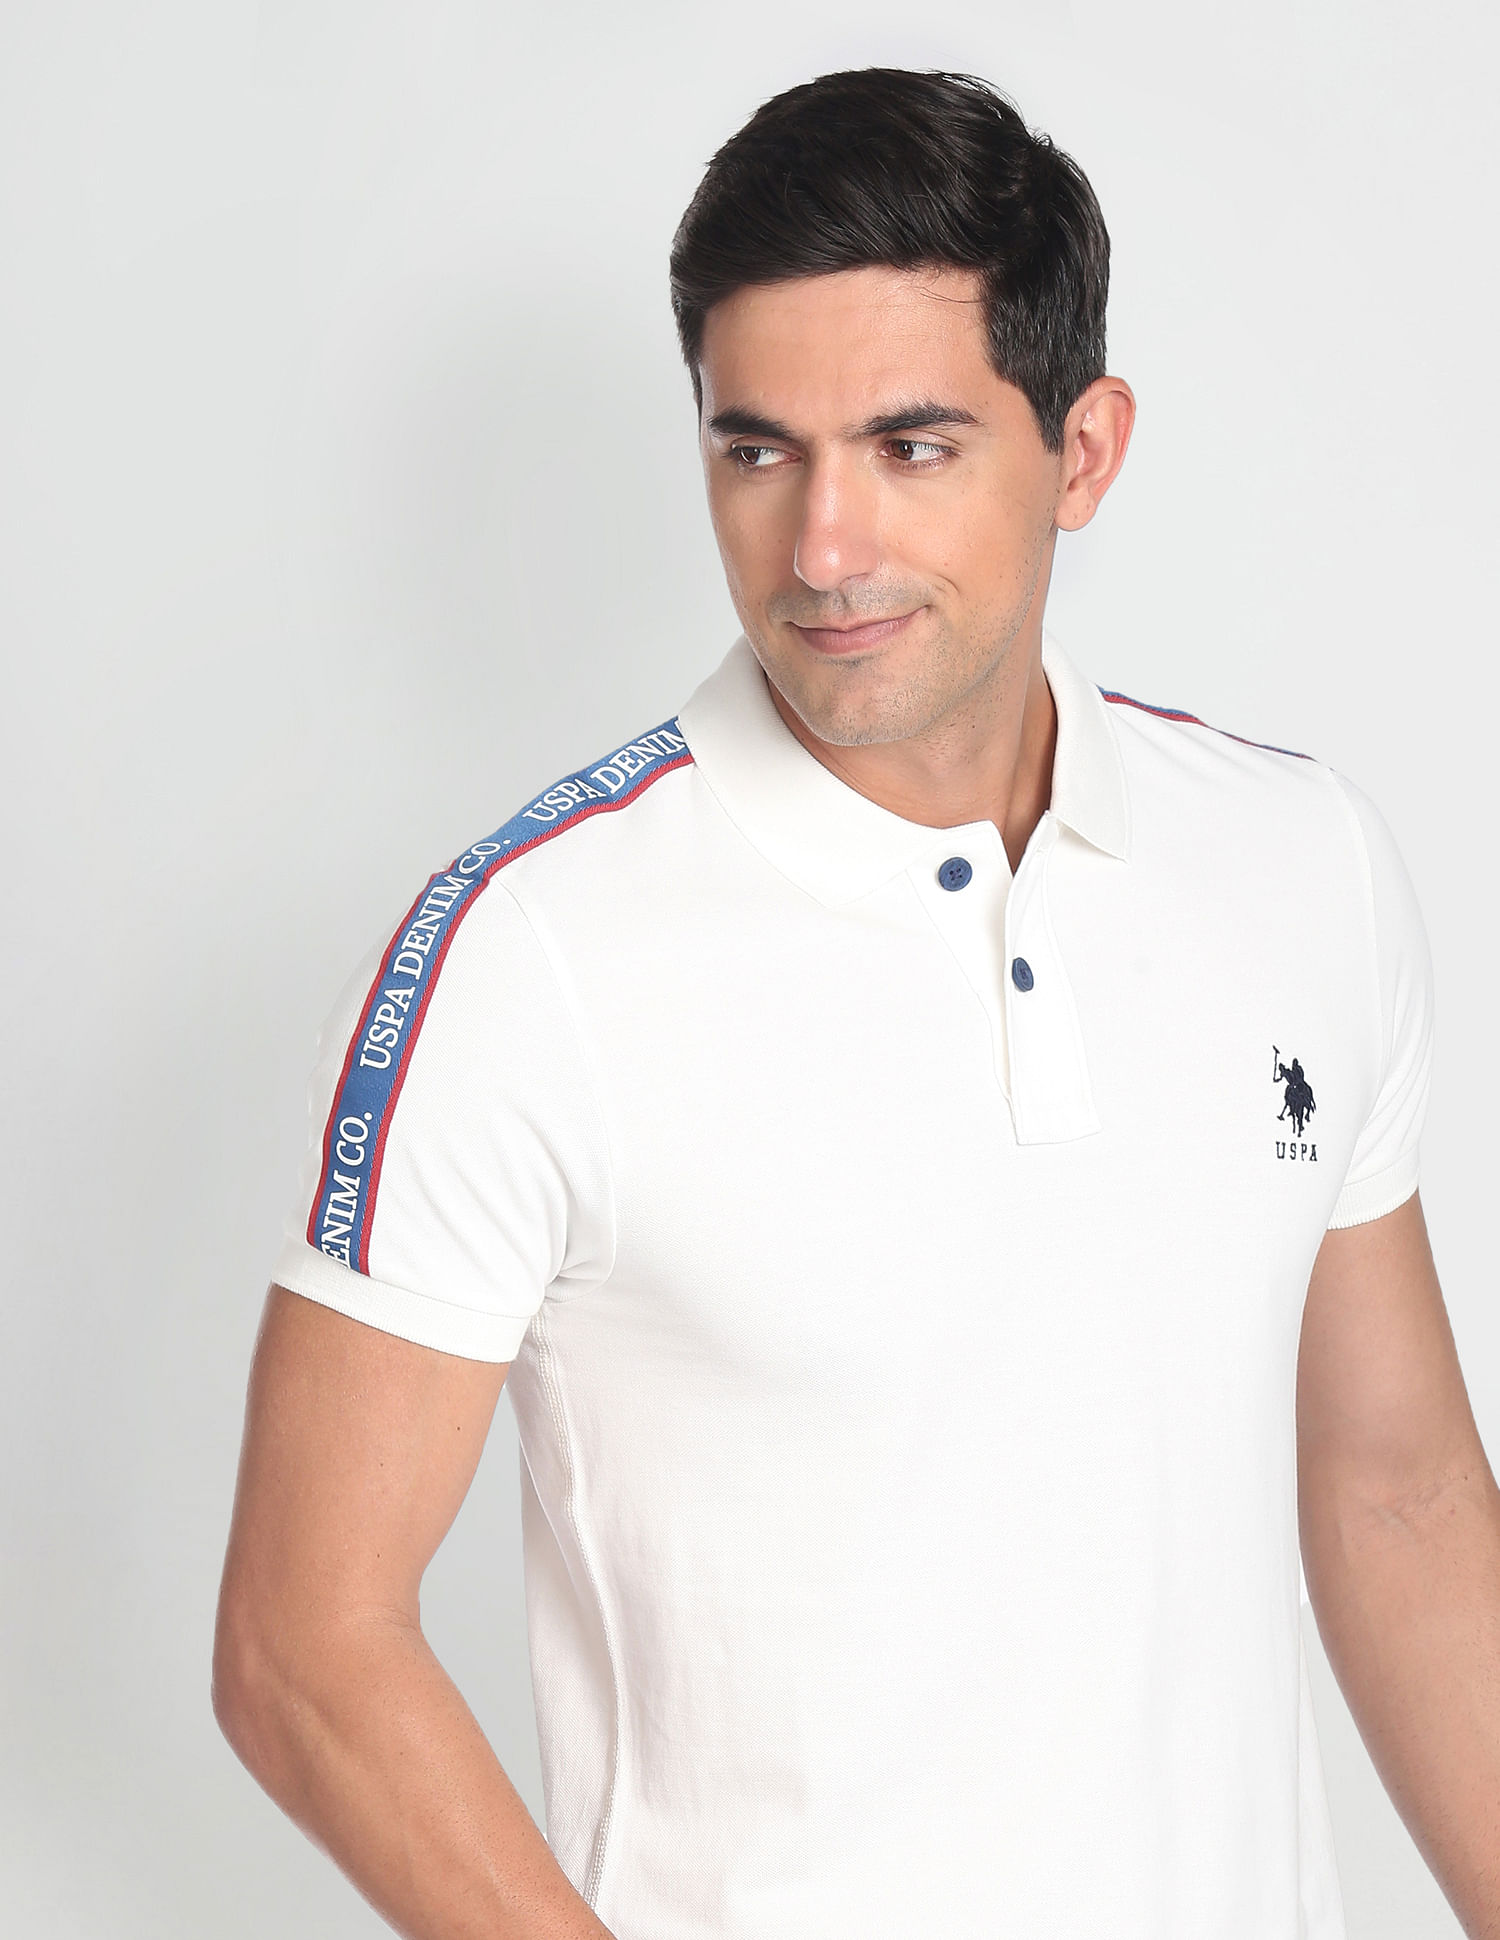 U.S. Polo Assn. Denim Co. Solid Cotton Polo Shirt, White (L)